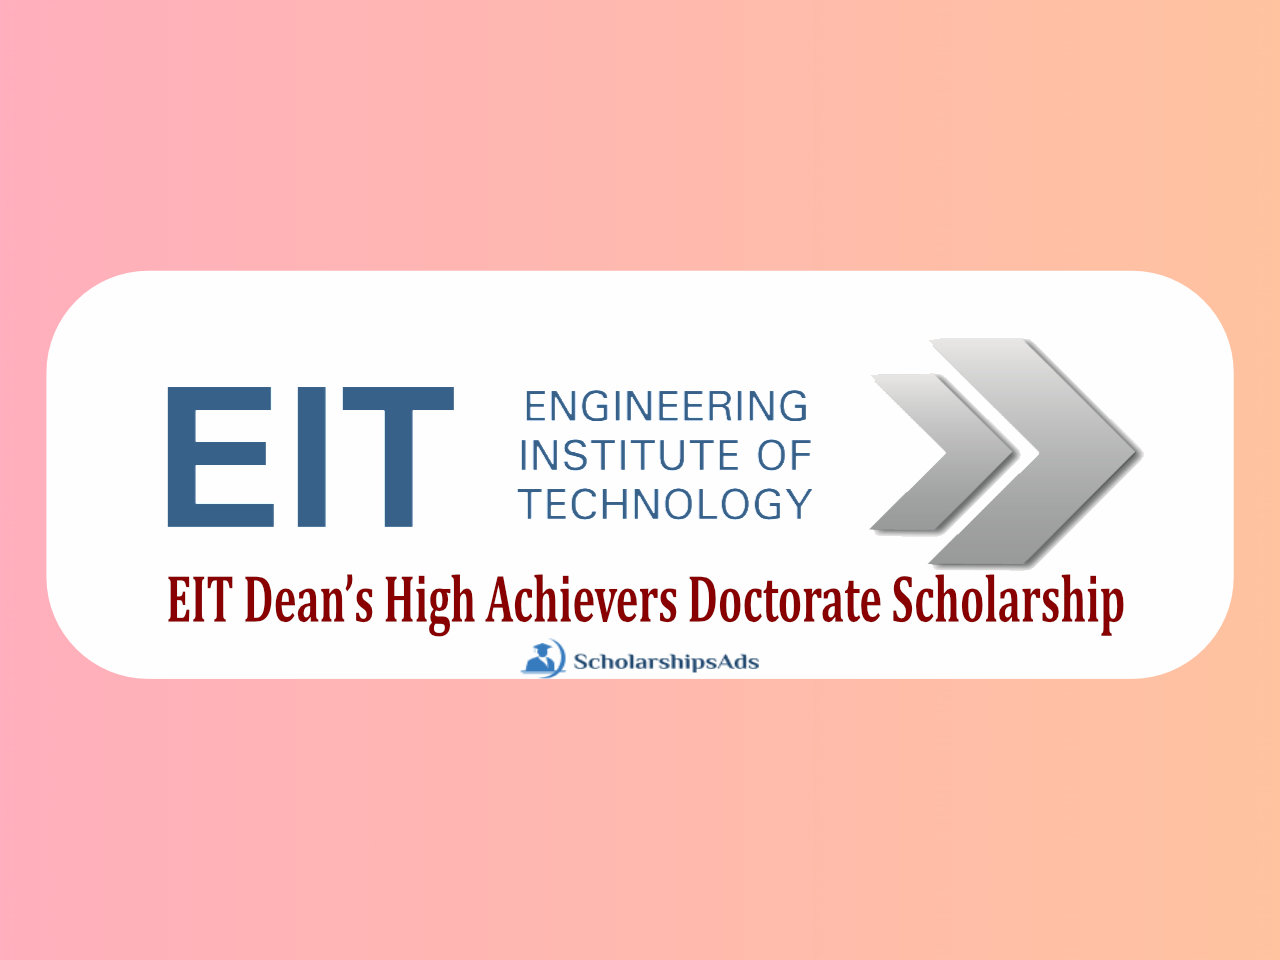 EIT Dean’s High Achievers Doctorate Scholarships.